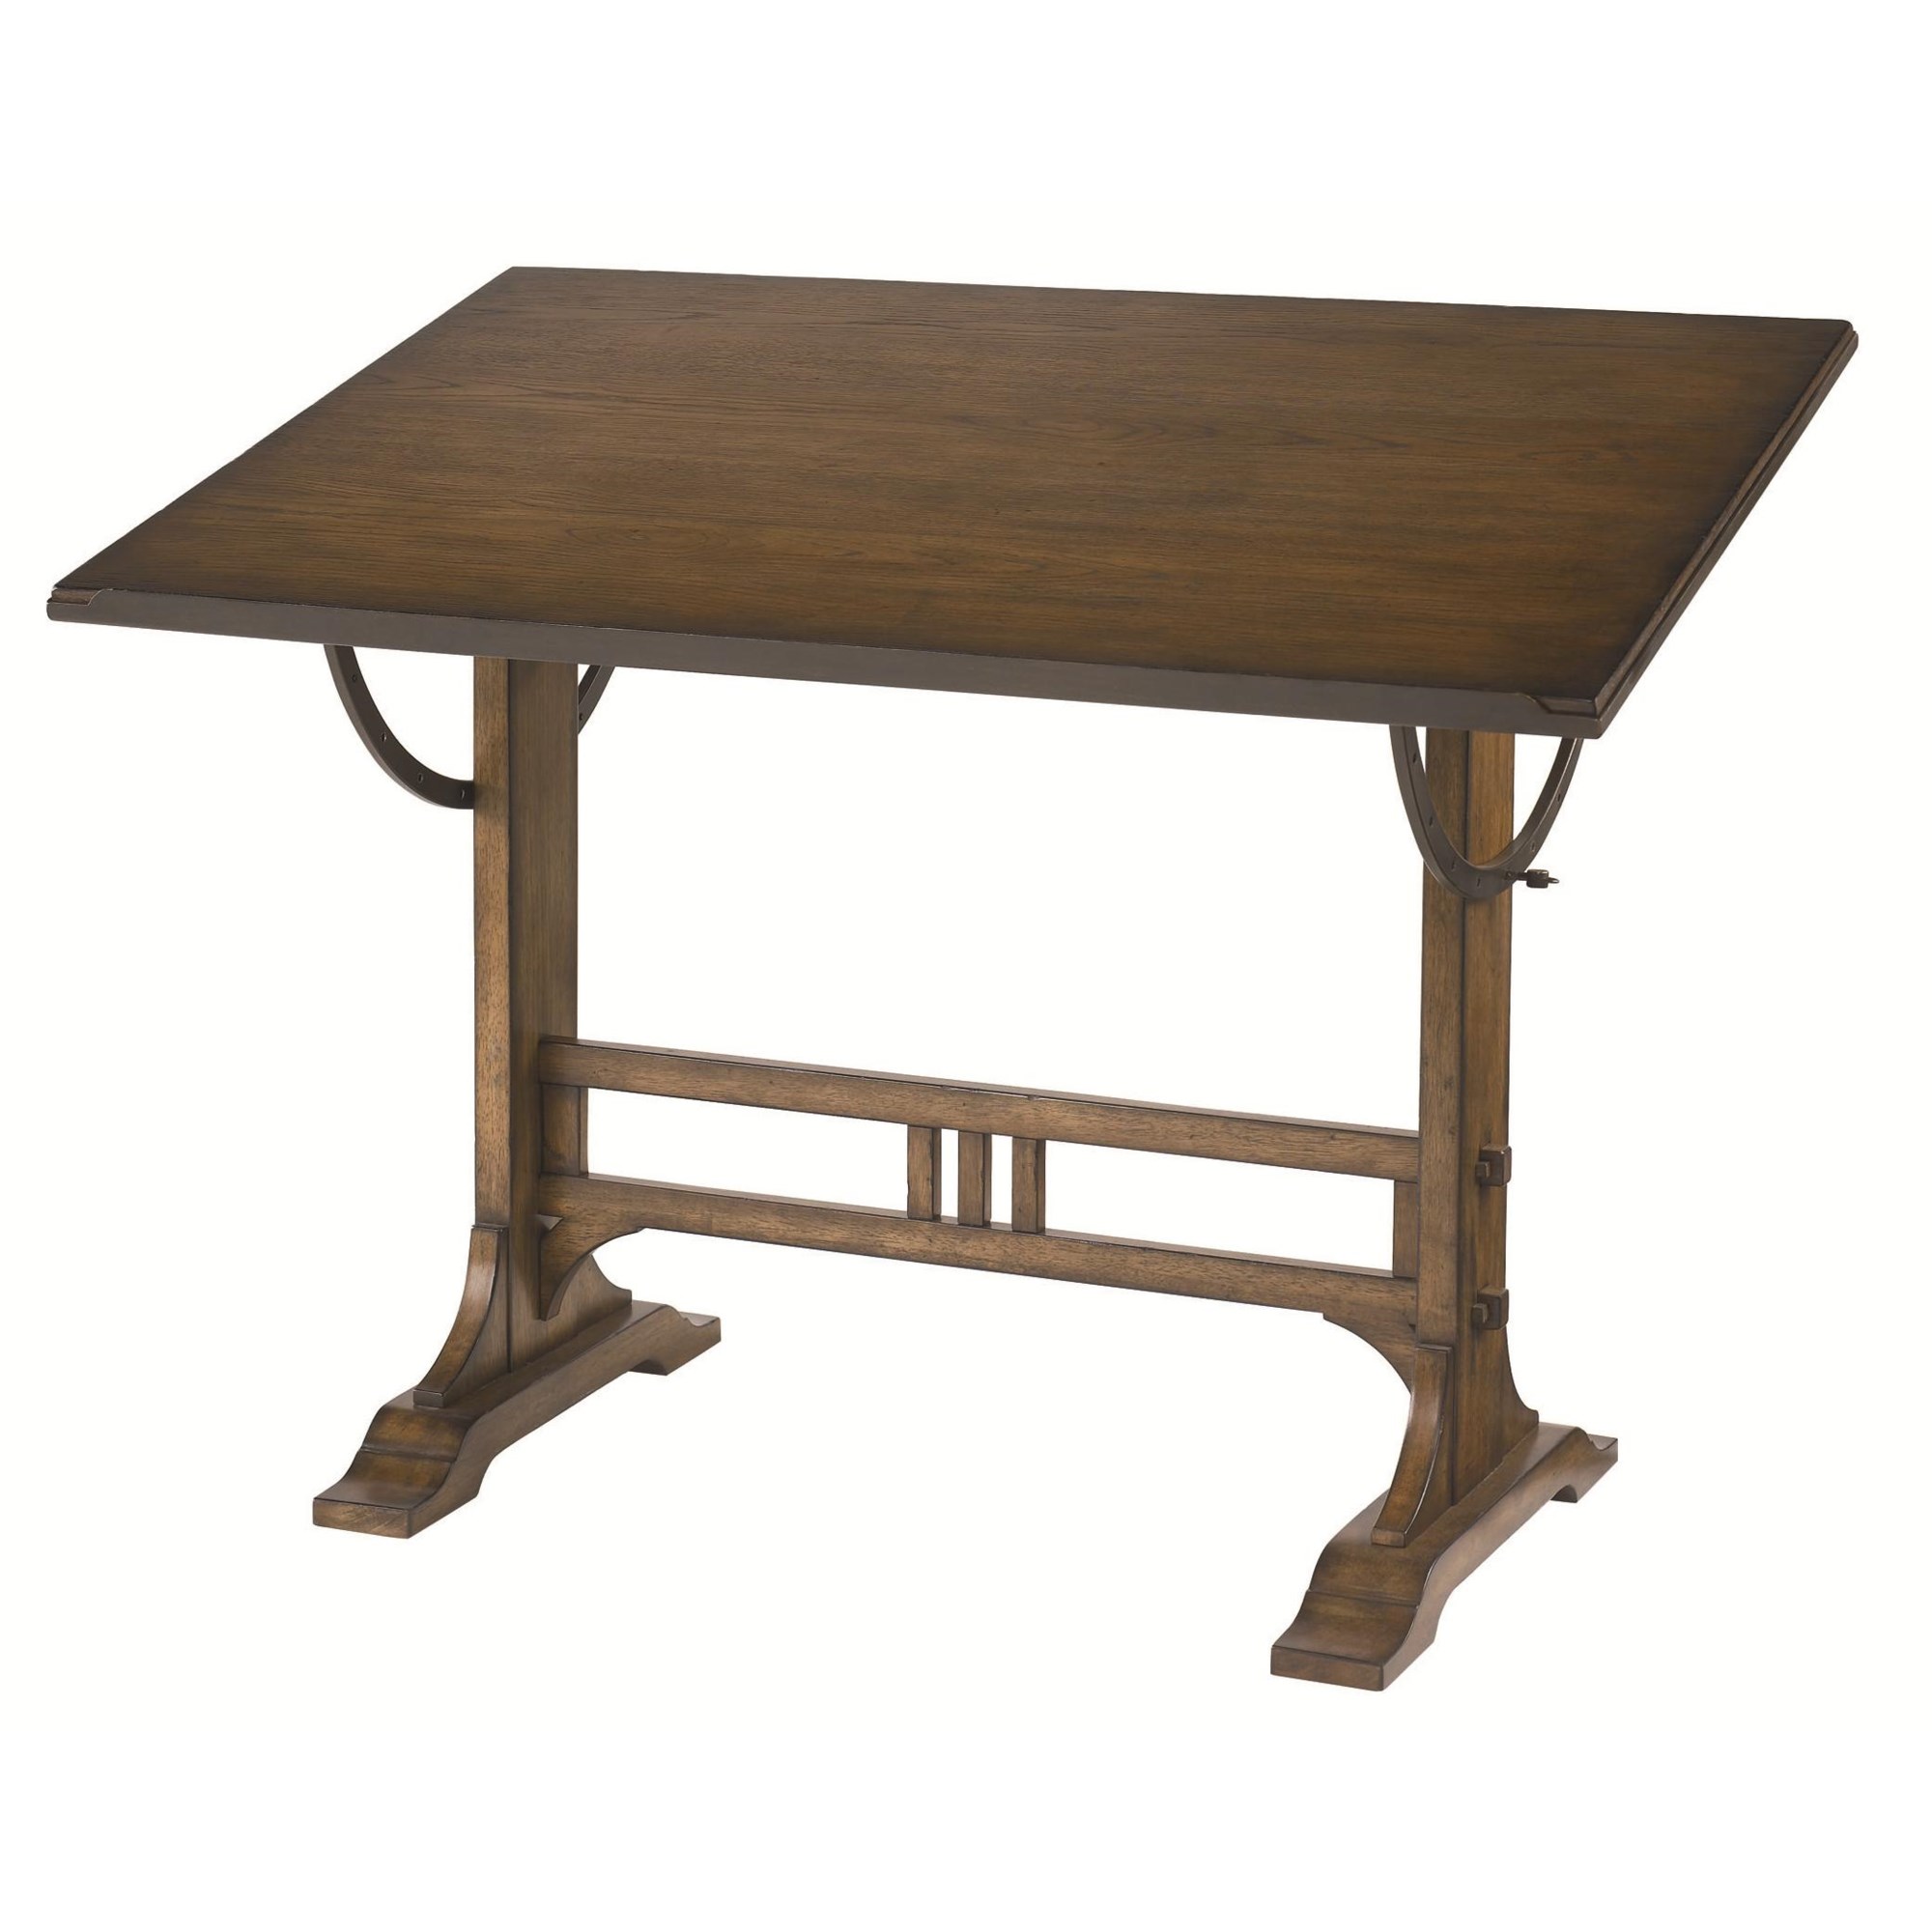 Hammary Studio Home 166-940 Mission Weathered Oak Architect Desk | Wayside  Furniture & Mattress | Desk - Table Desks